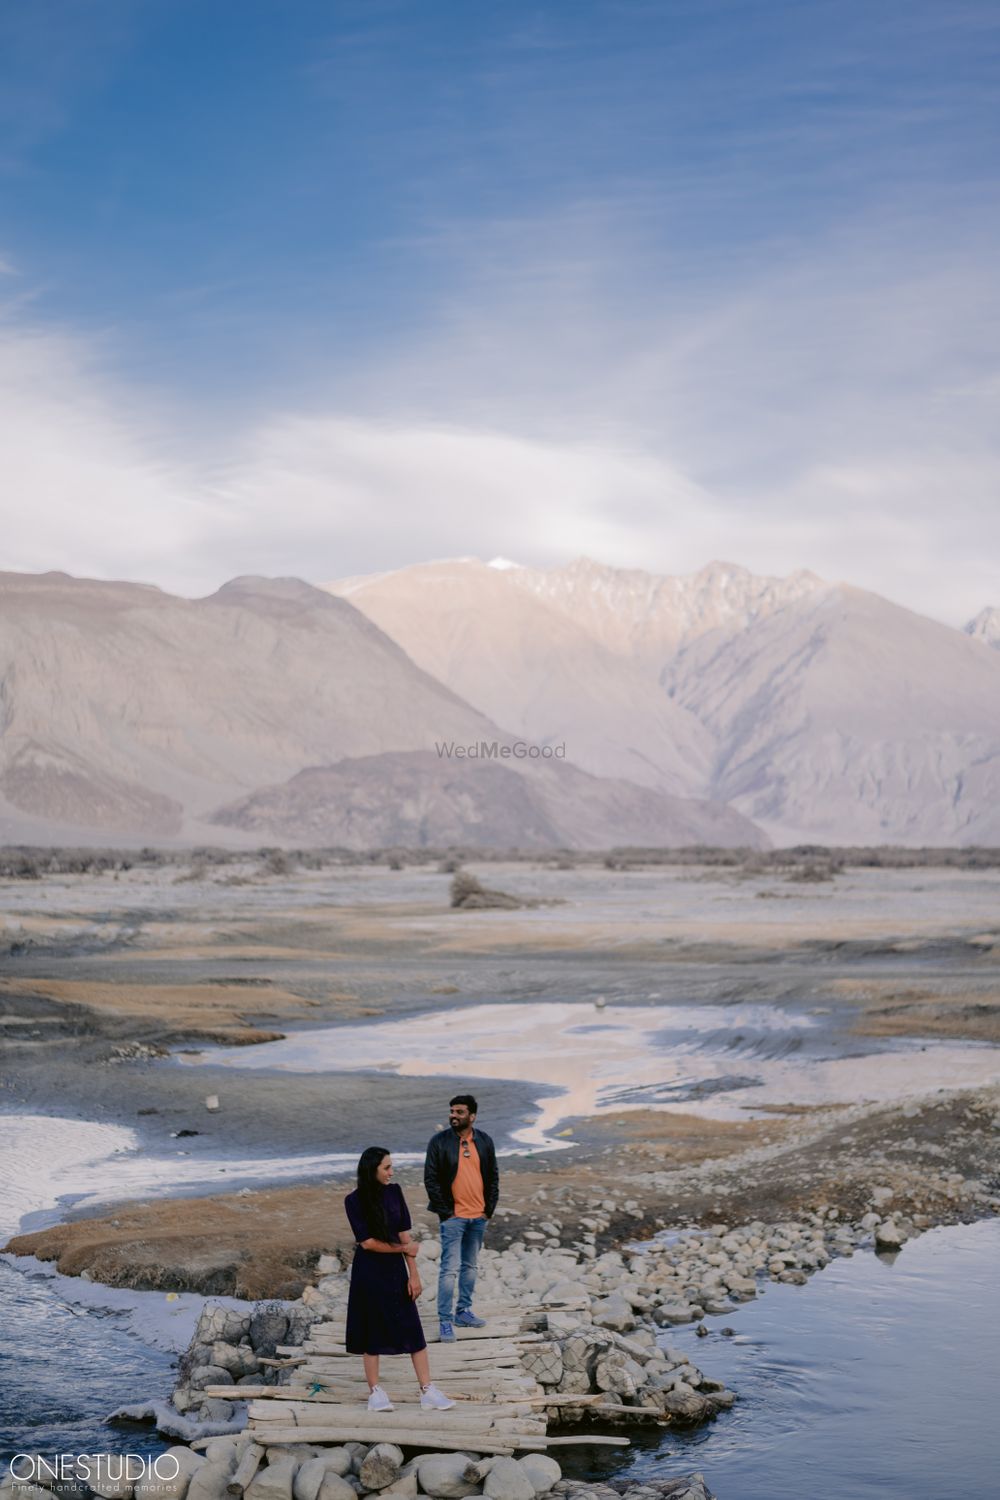 Photo From Krishna Chaitanya (Leh Ladakh) - By One Studio